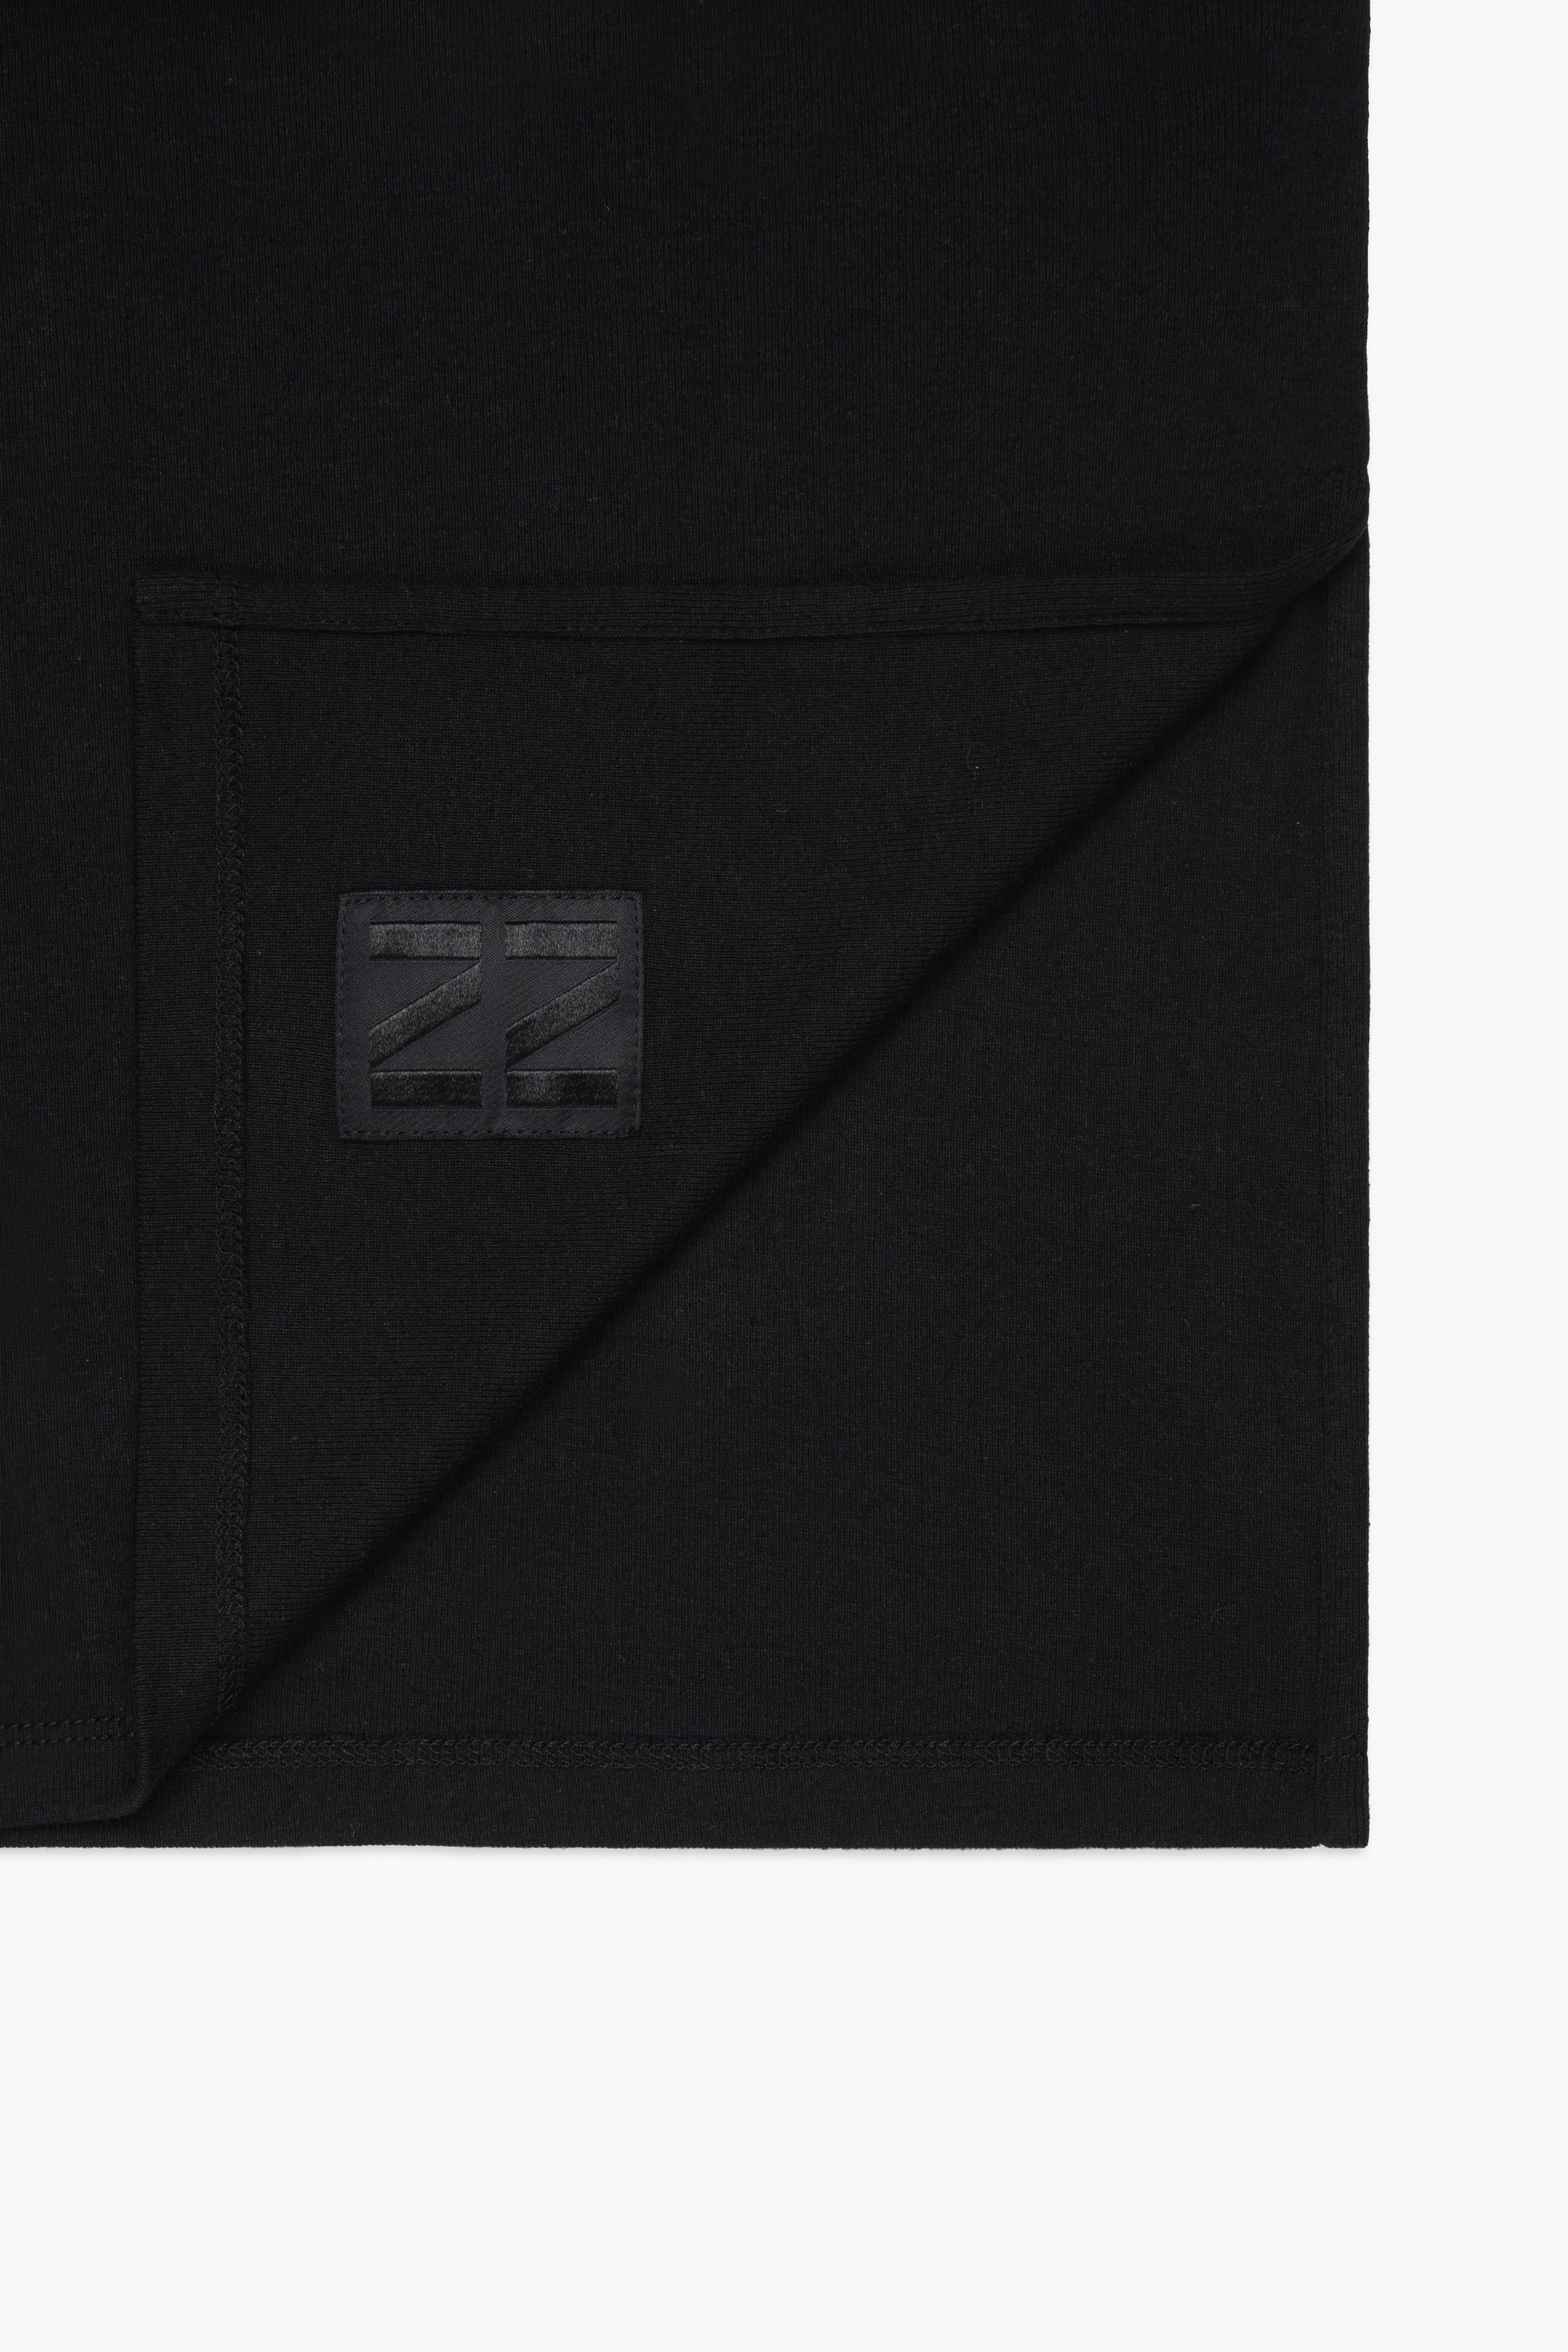 Close up of inside label of black long sleeve t-shirt ovnnie